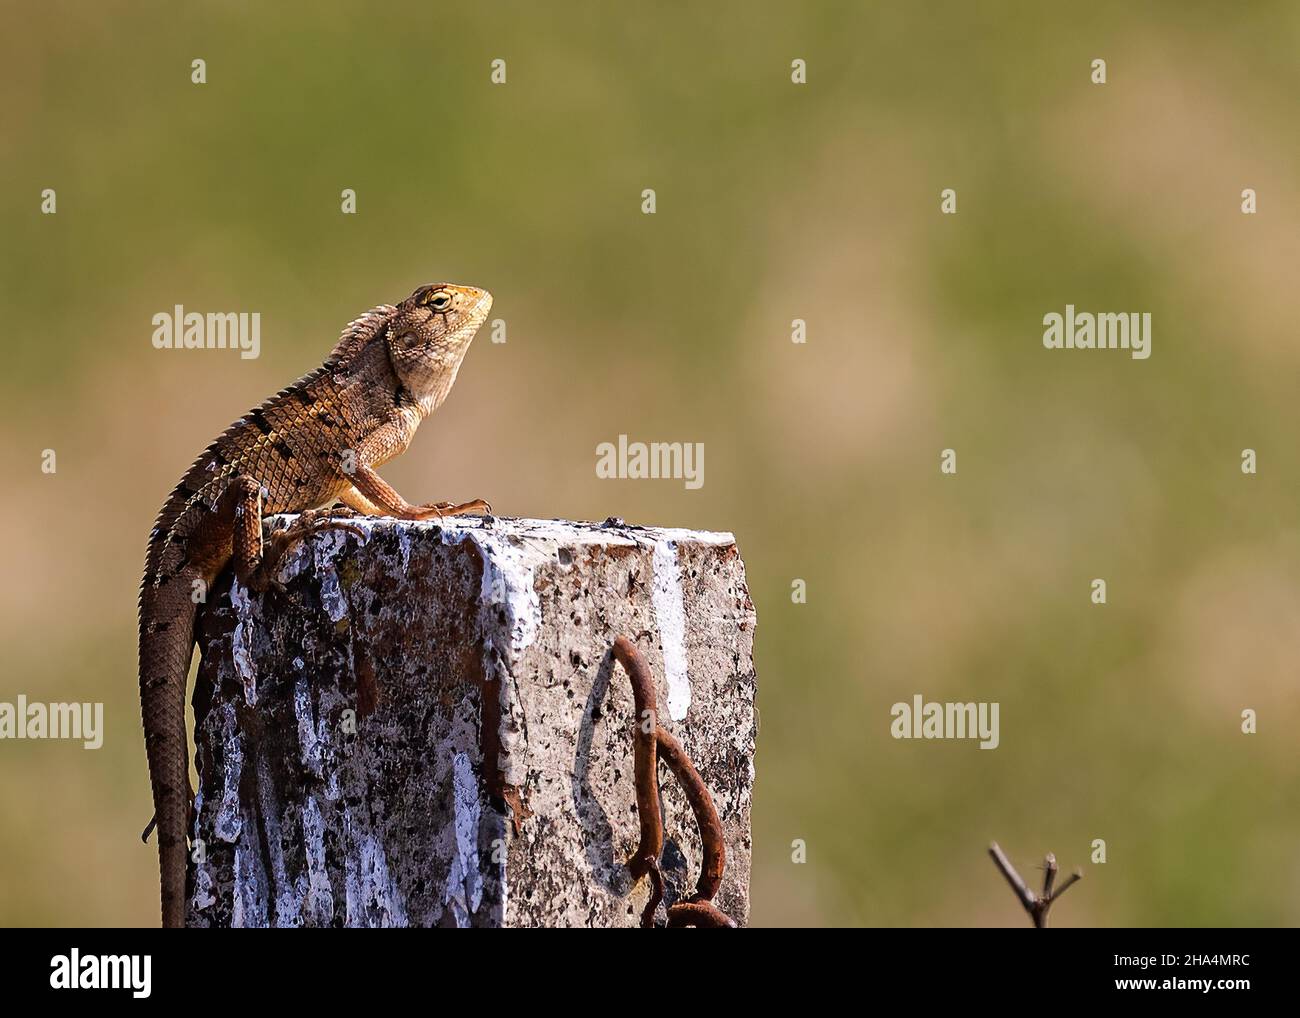 Chameleon sitting on a pillar against green background Stock Photo